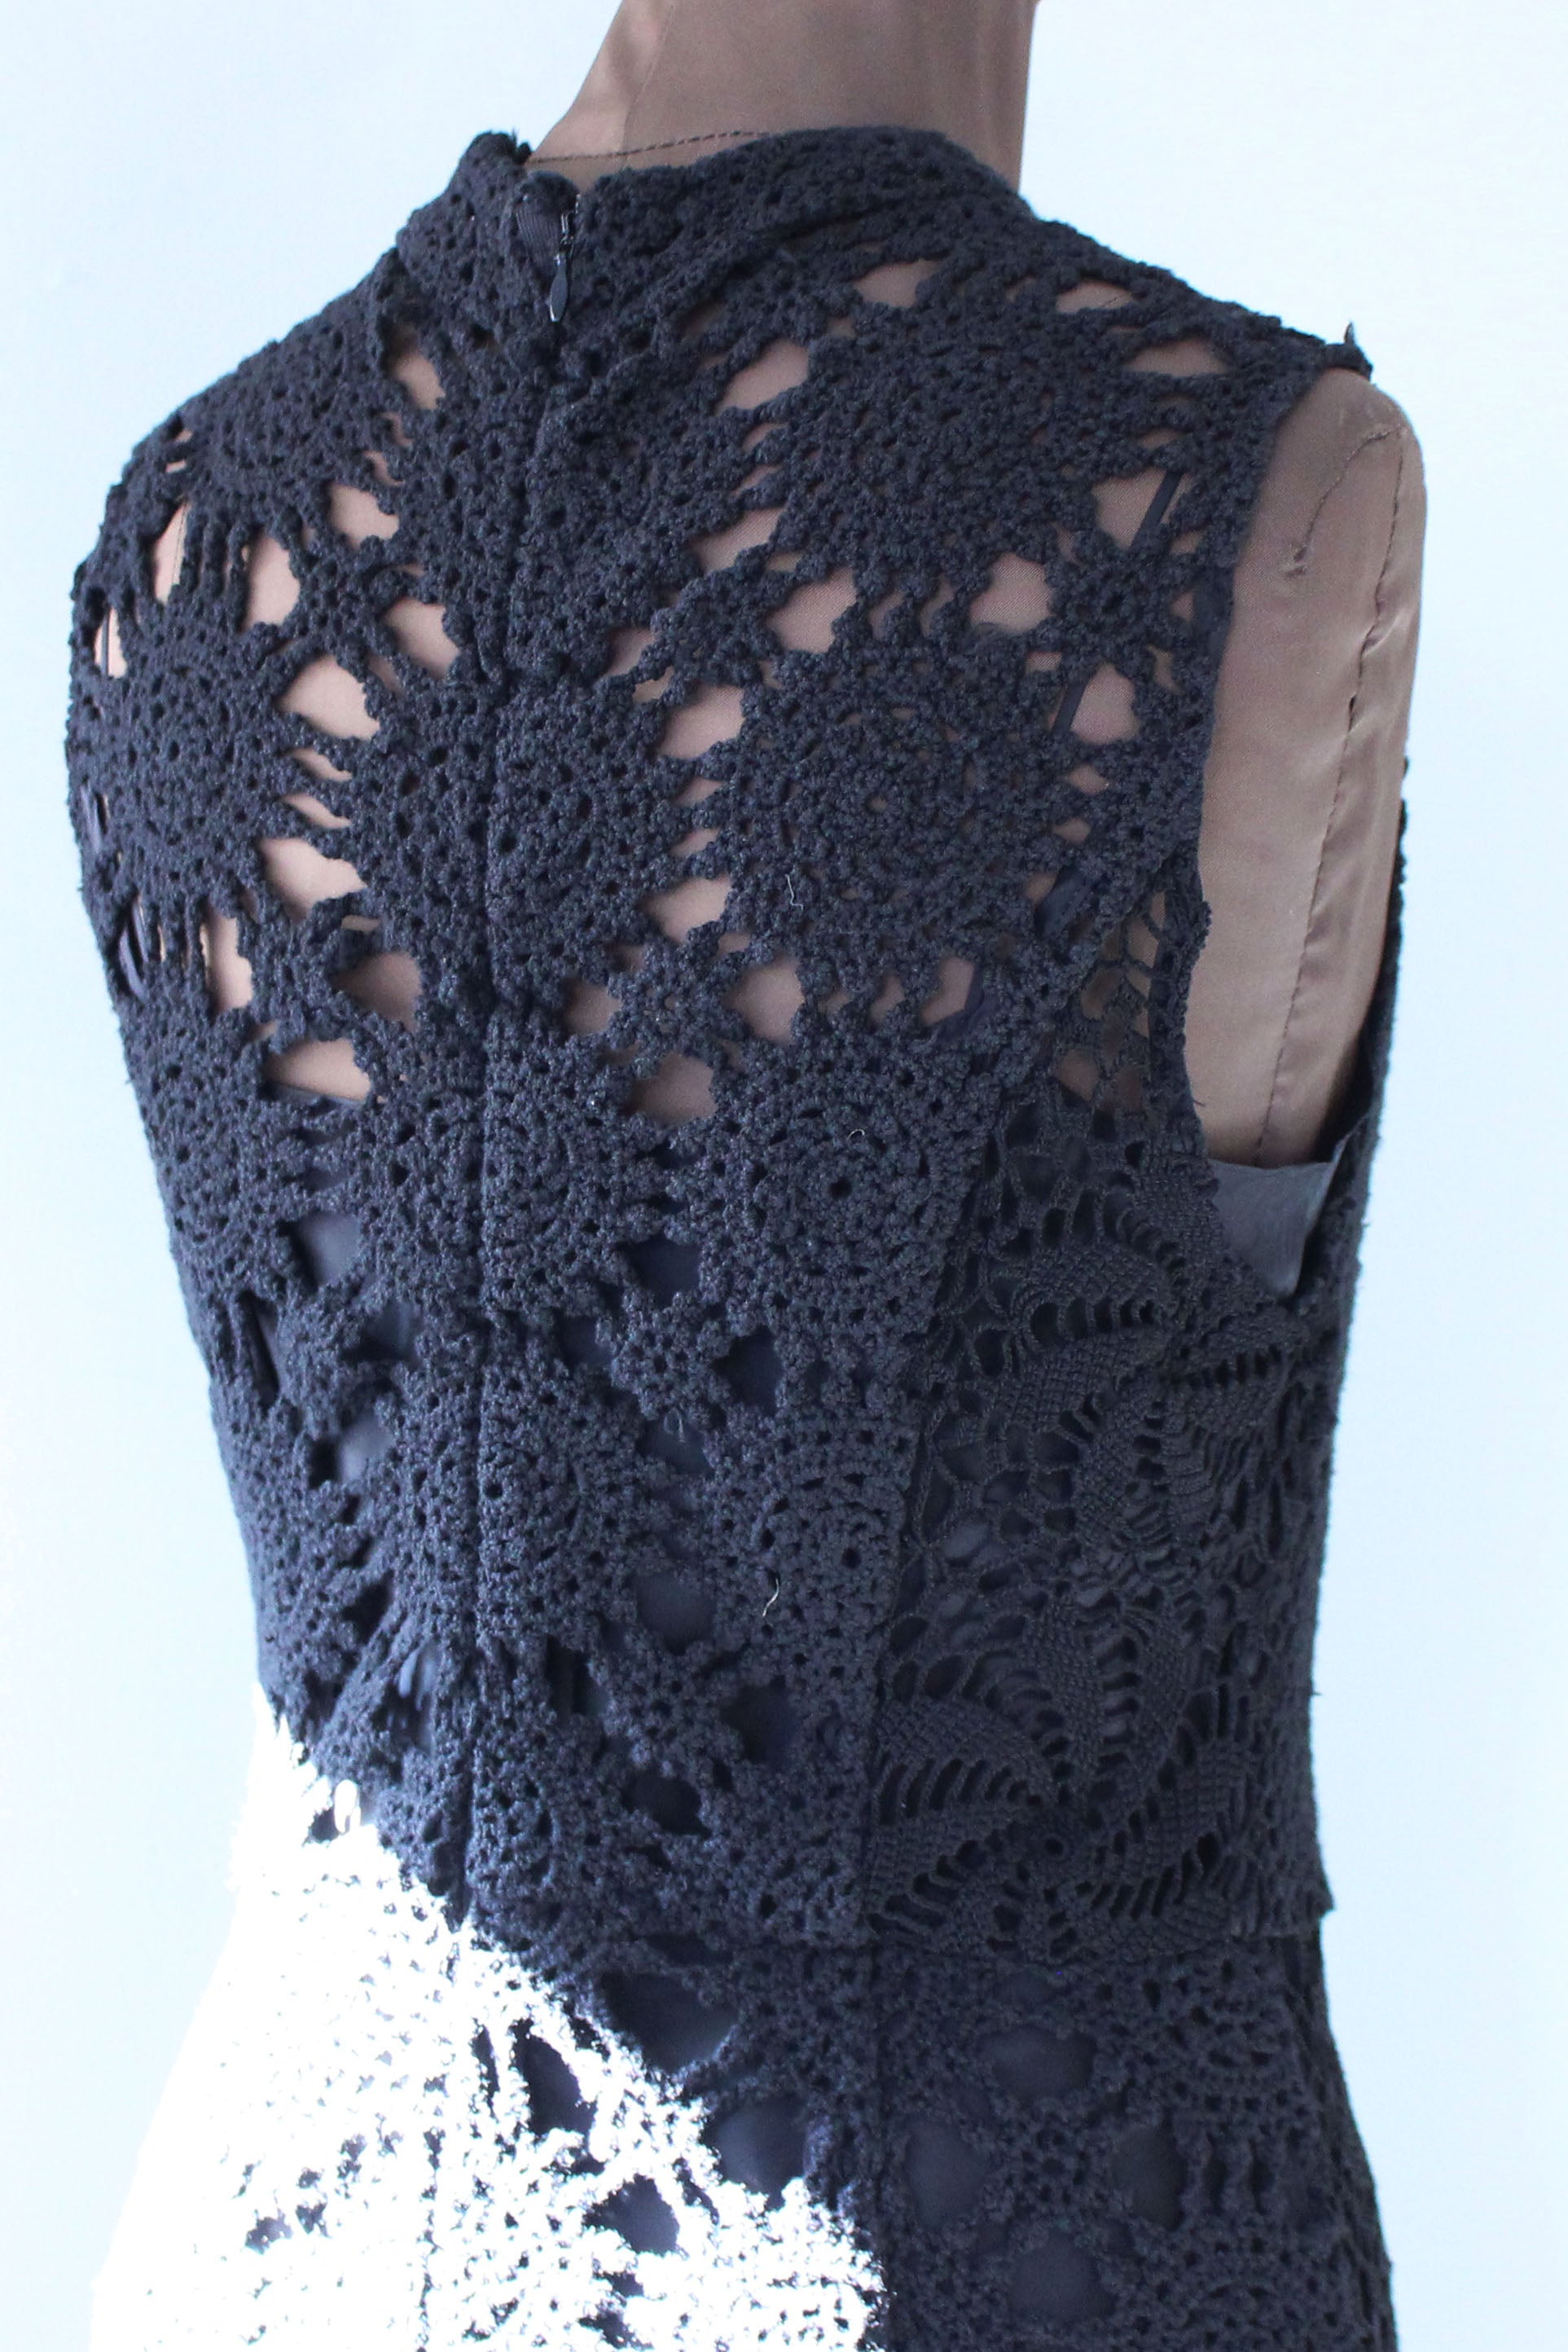 MALION vintage “crochet lace high neck dress (black)”